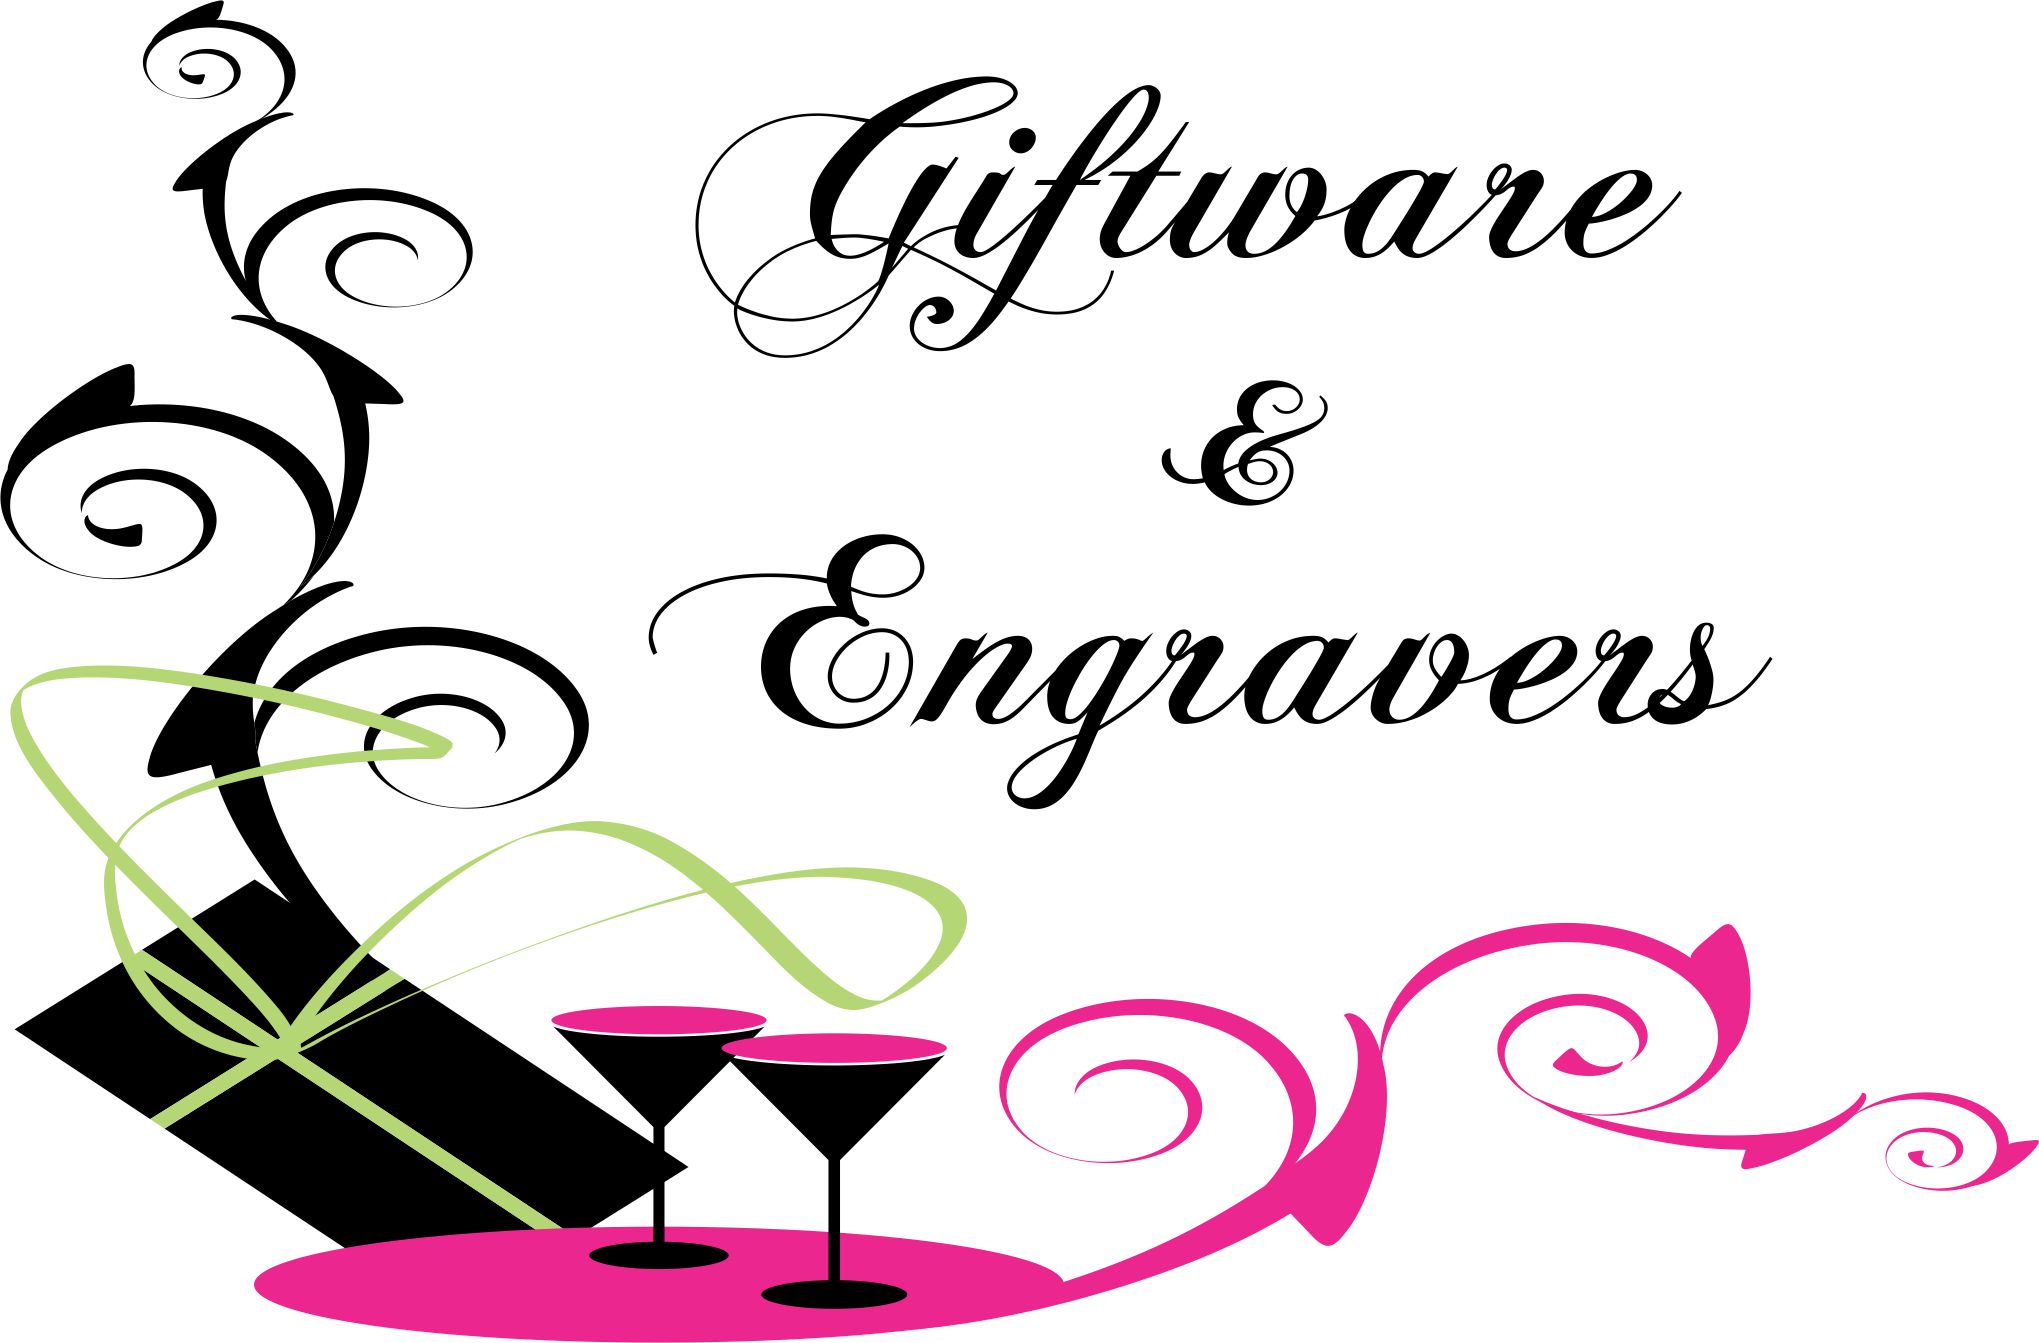 Giftware Engravers